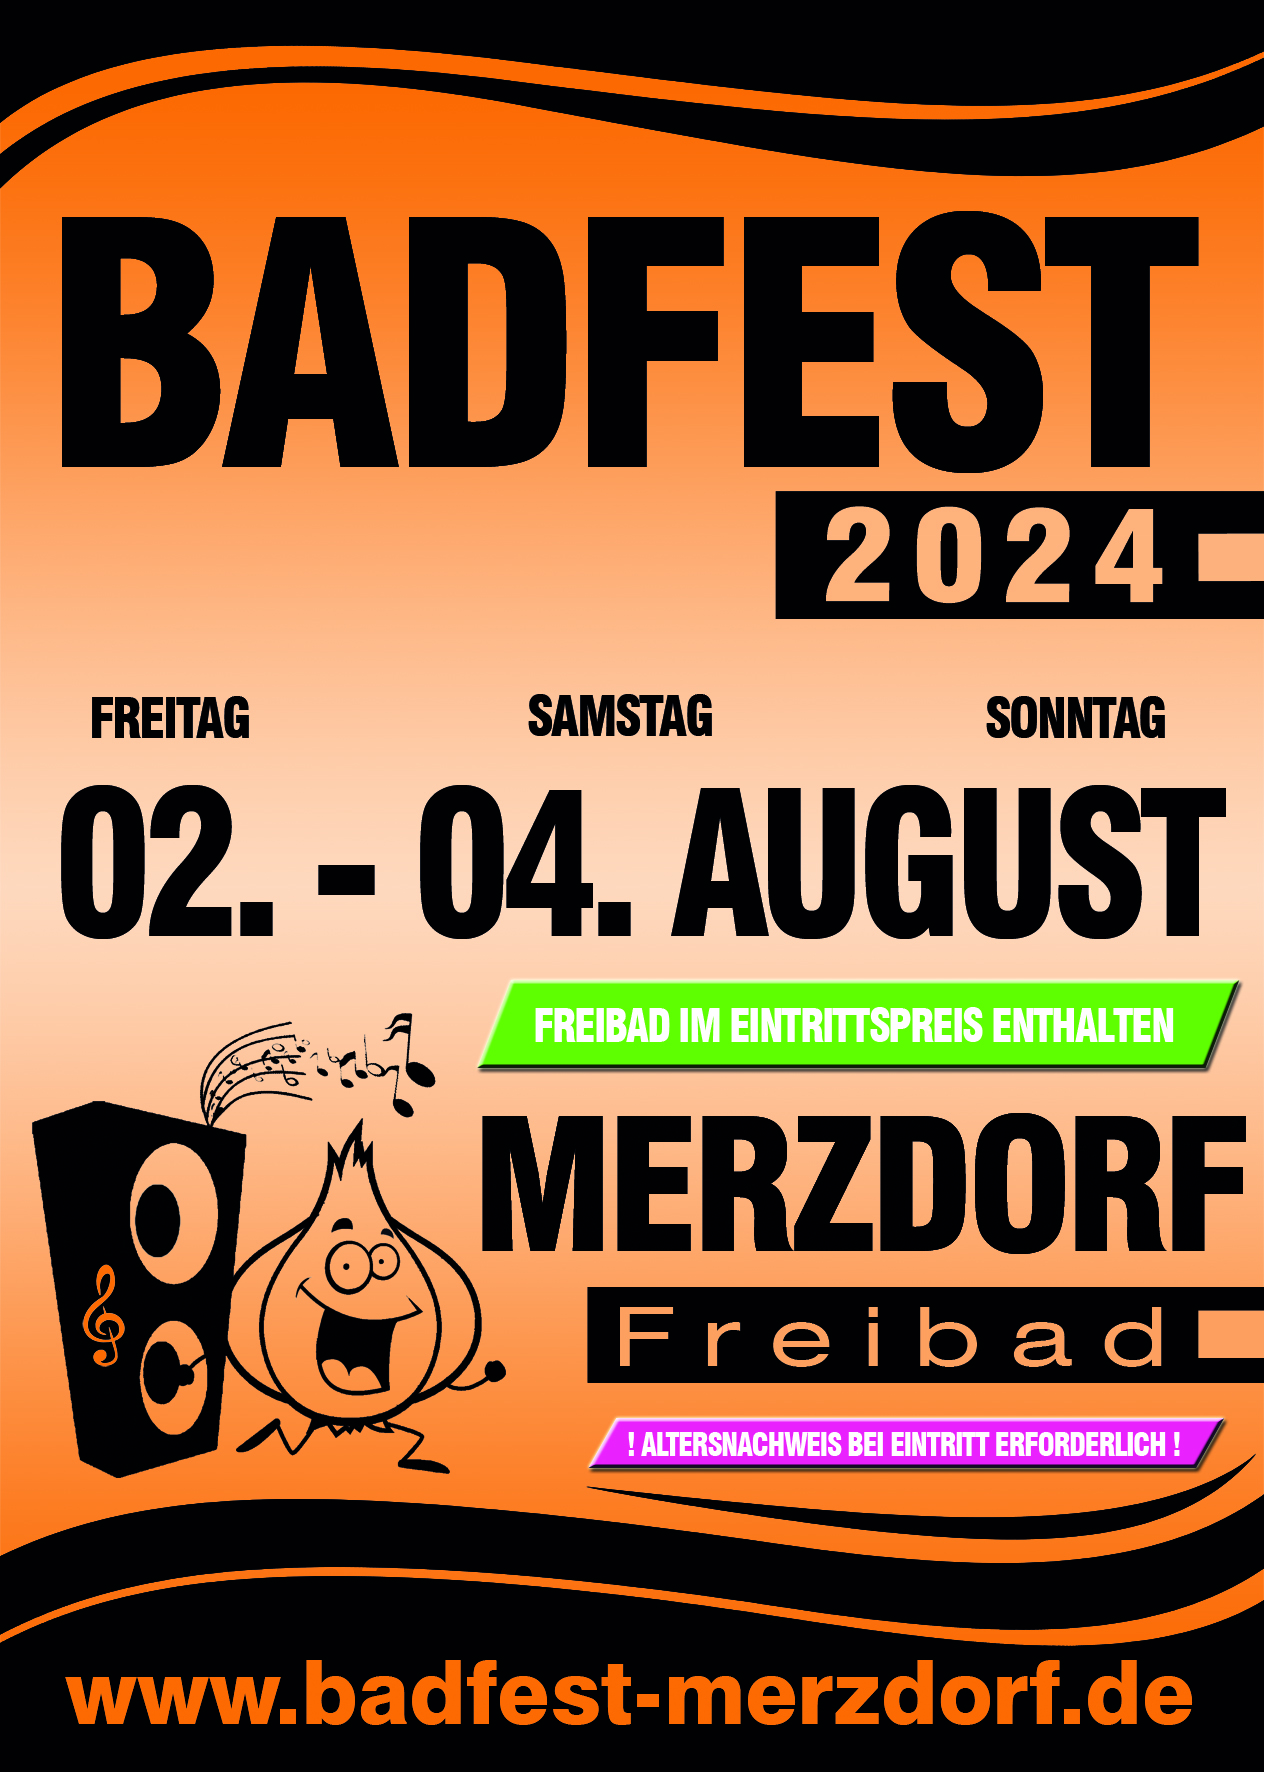 (c) Badfest-merzdorf.de